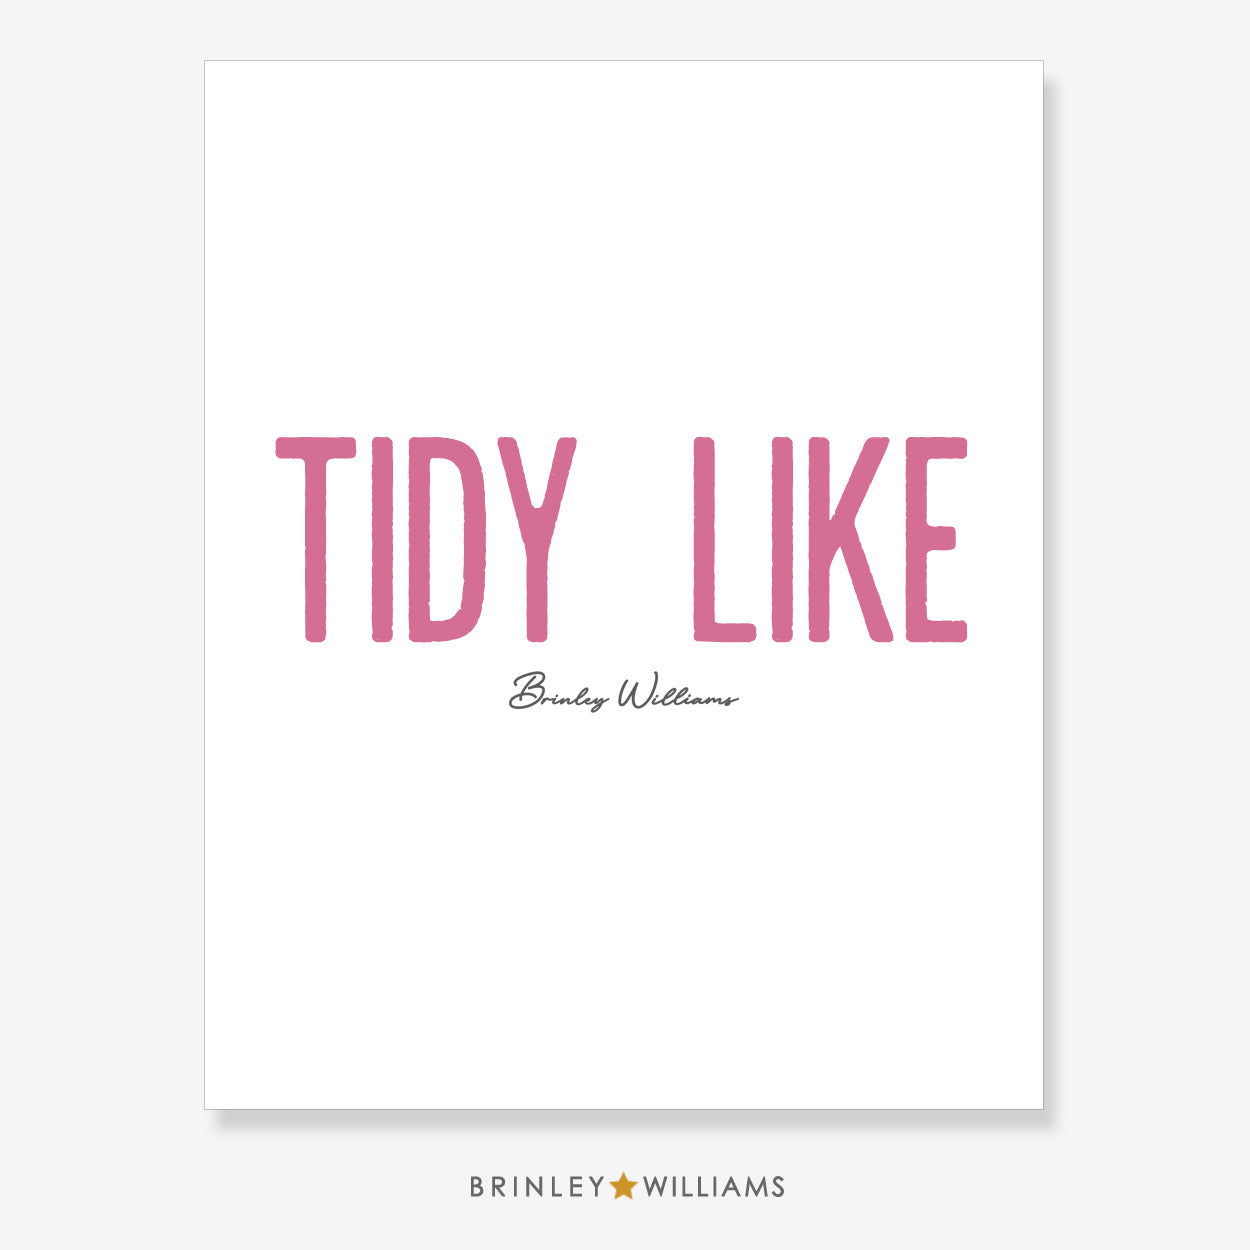 Tidy Like Wall Art Poster - Pink